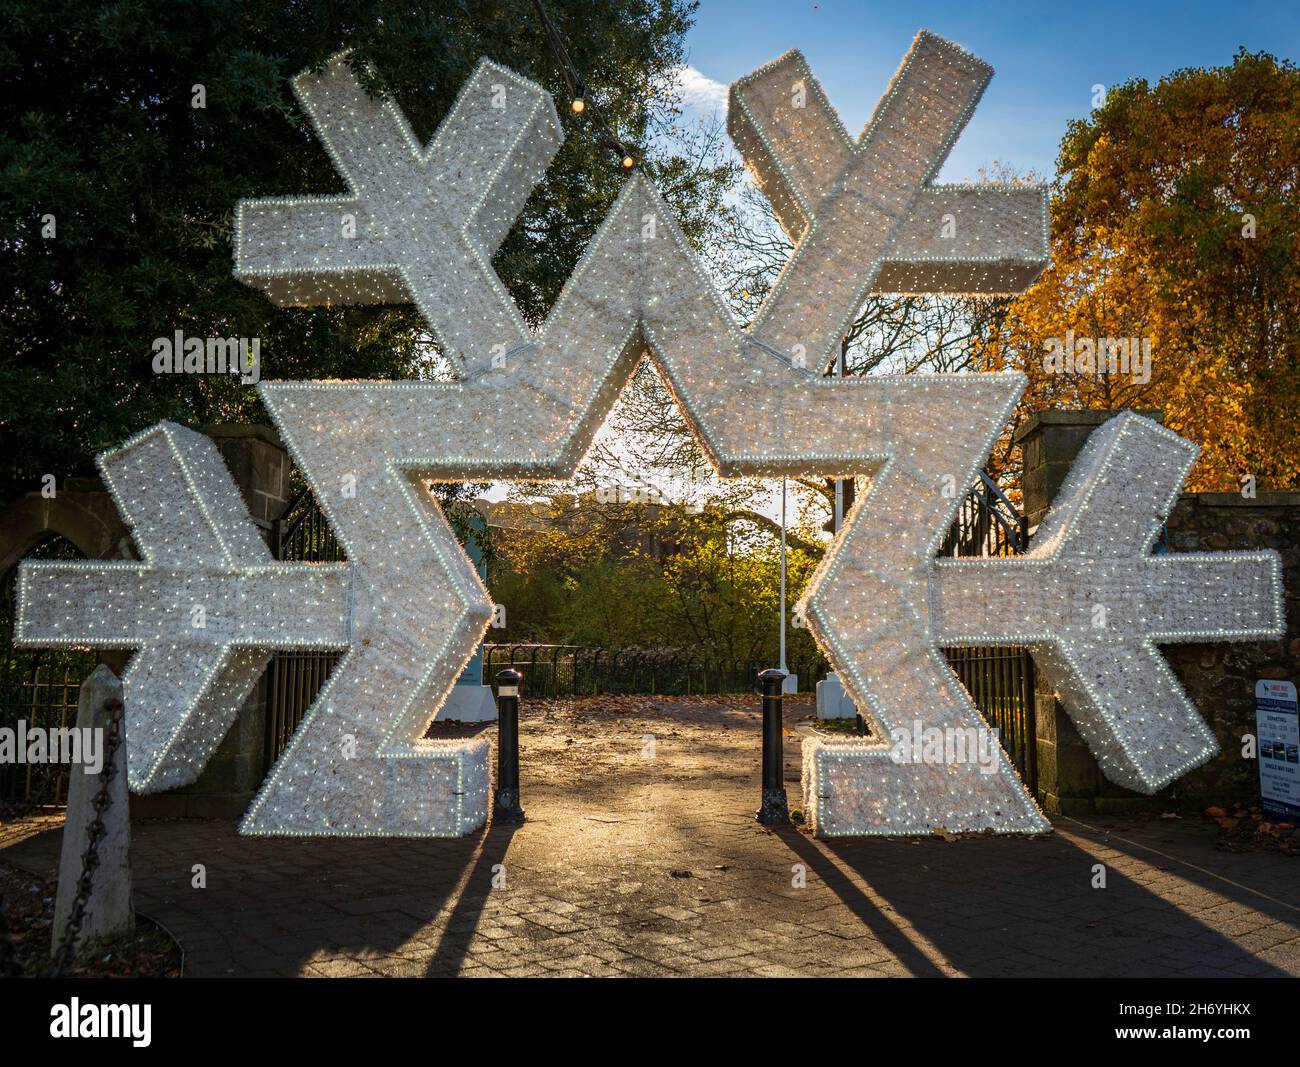 Snowflake display Stock Photo